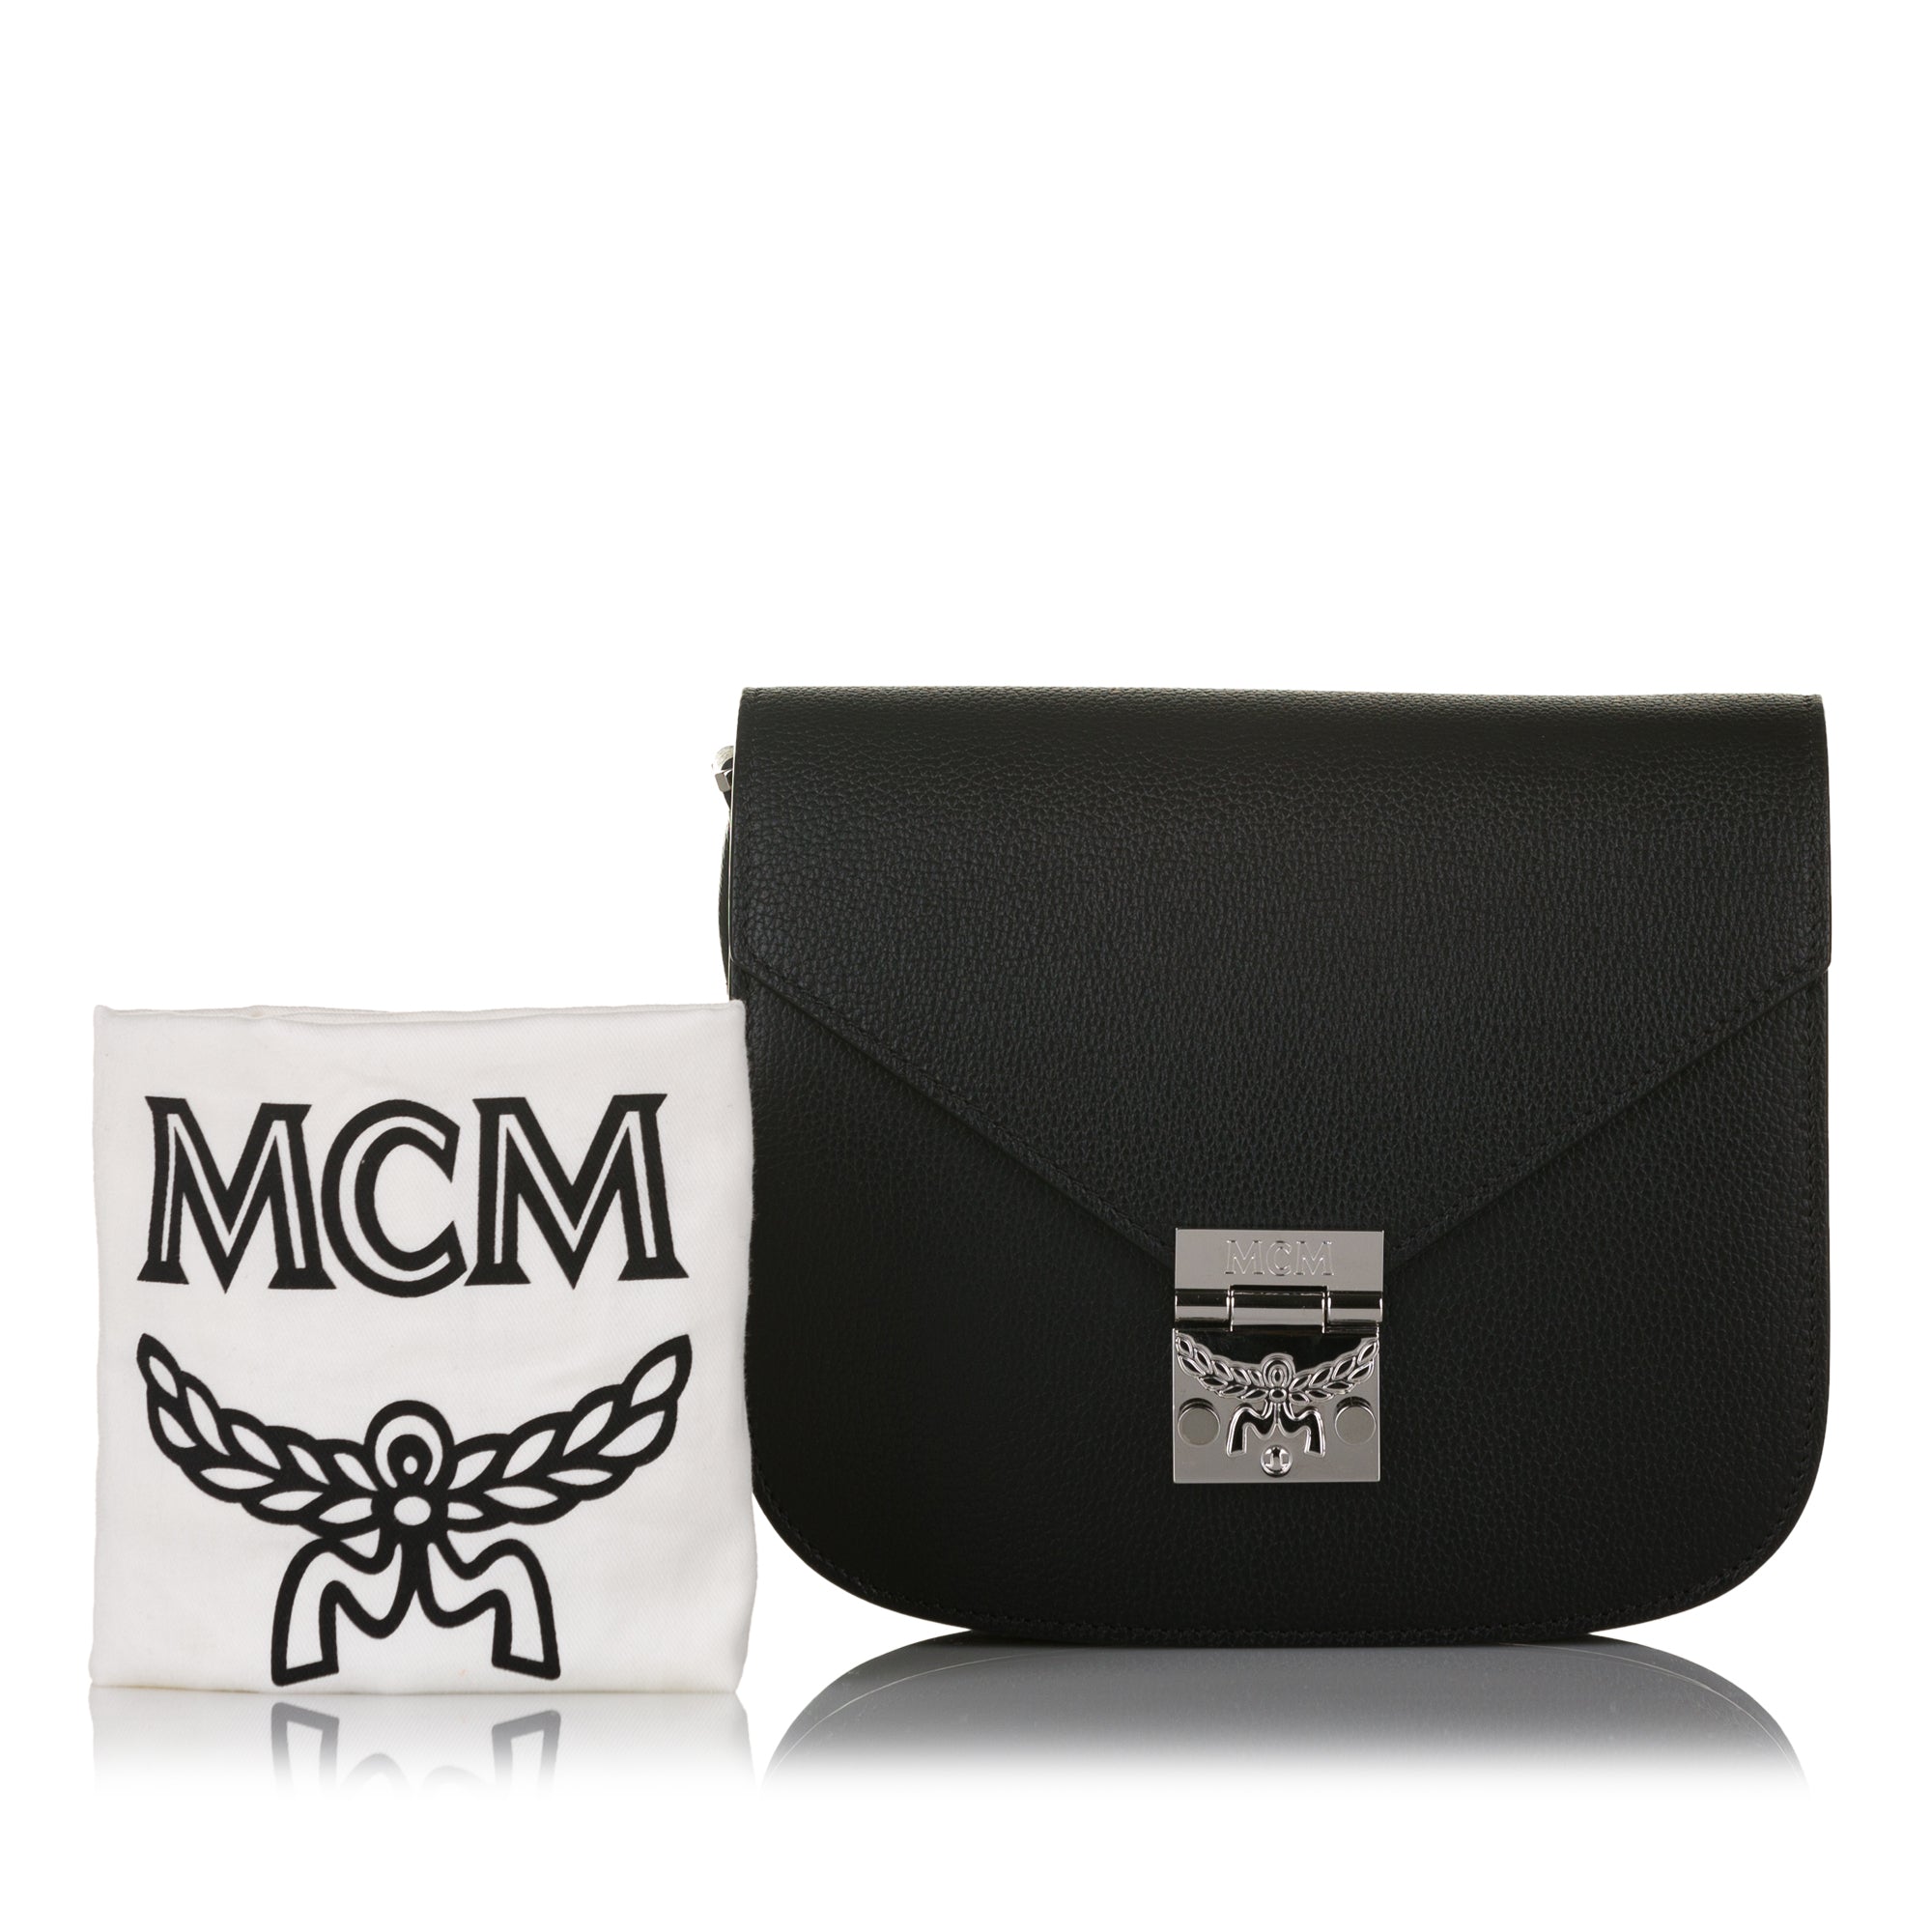 MCM MCM Women's Patricia Green / Black / White Leather Medium Crossbody Bag  • Fashion Brands Outlet